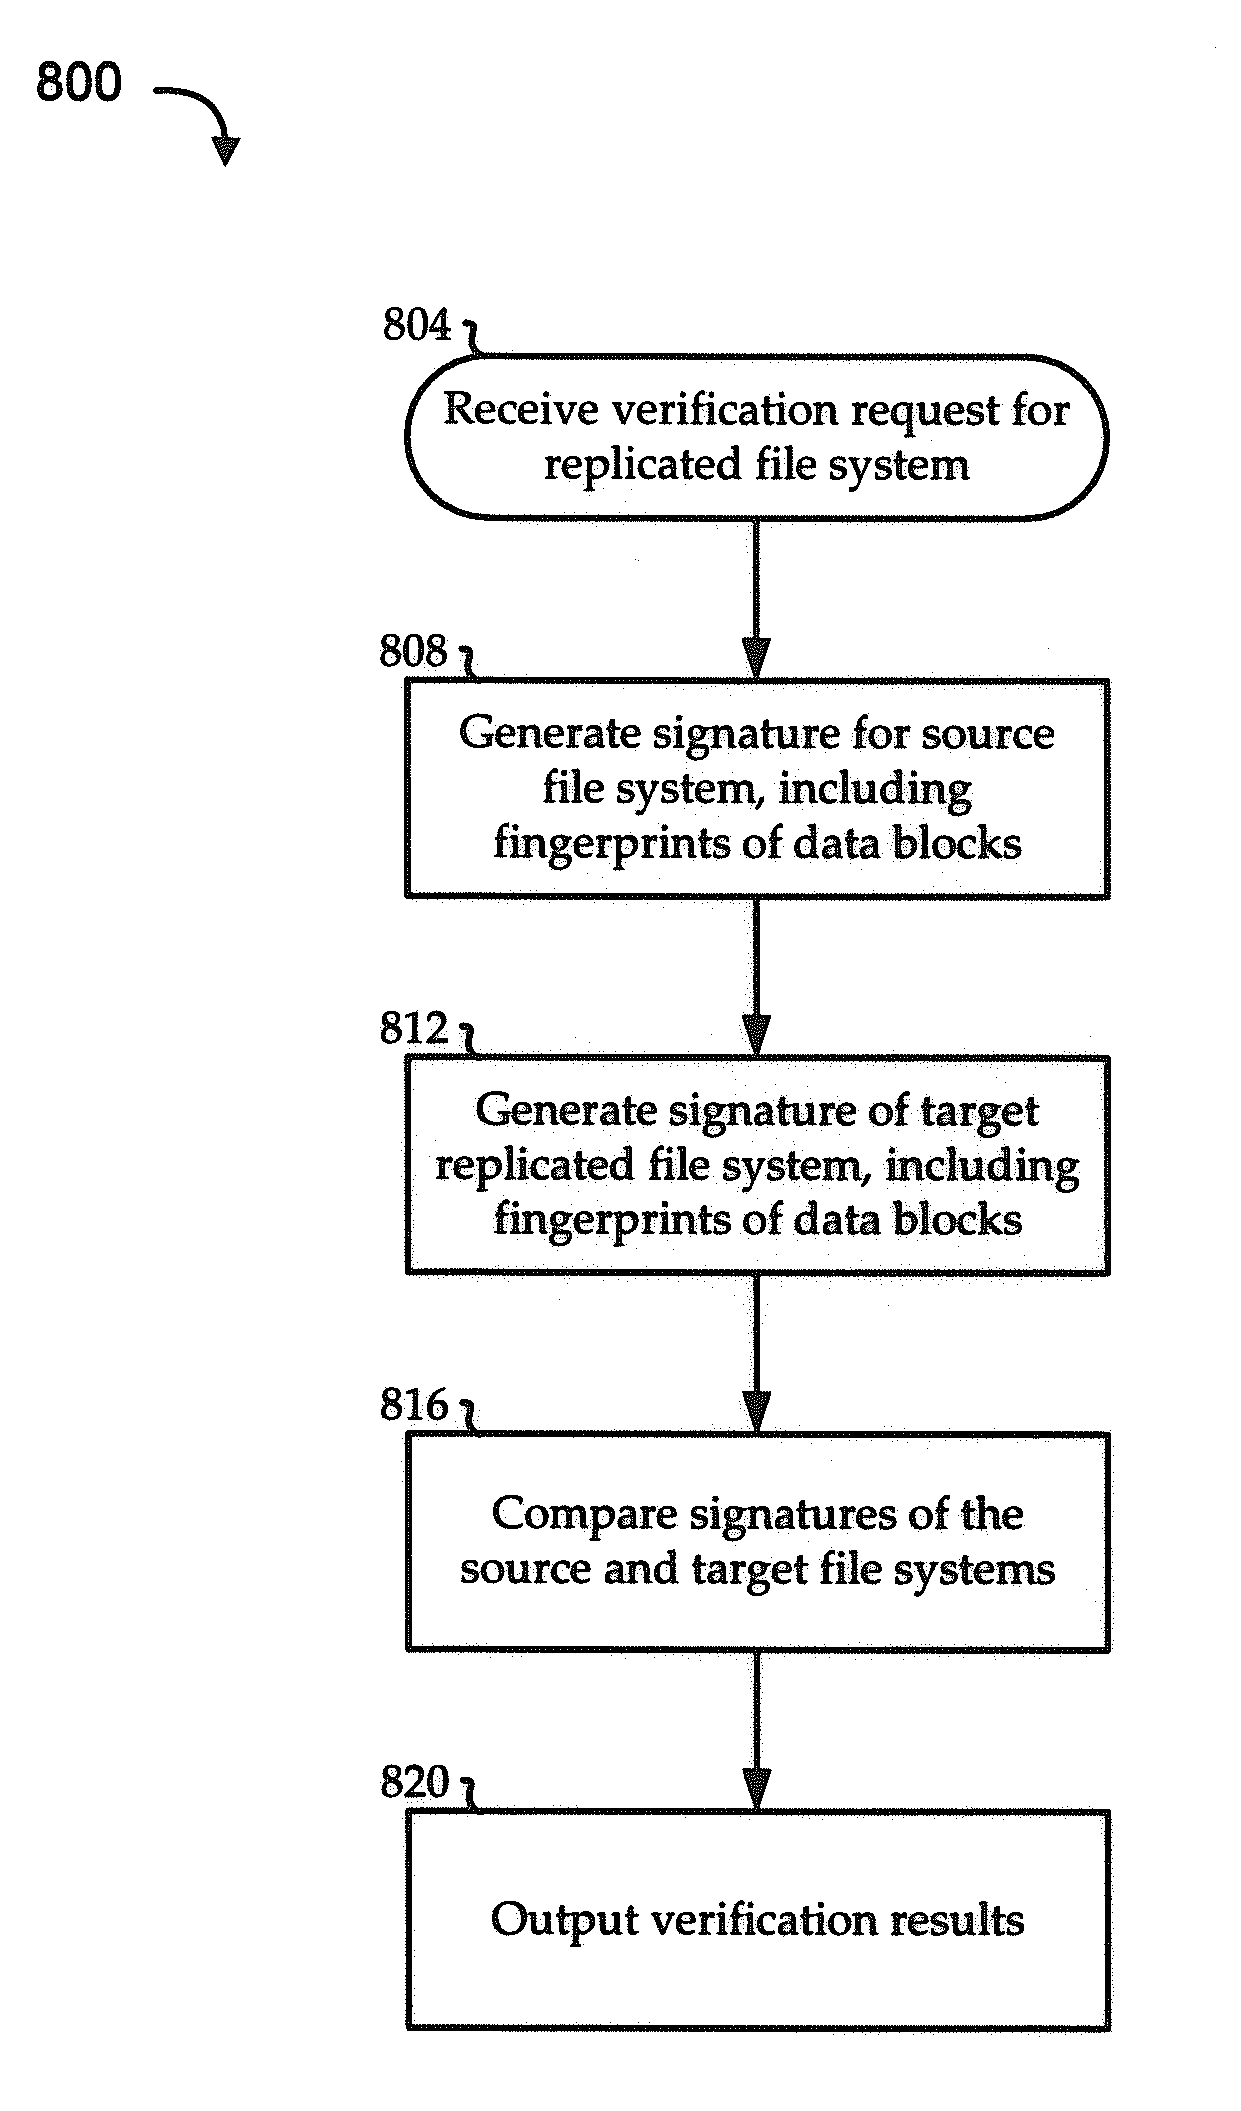 Offline verification of replicated file system